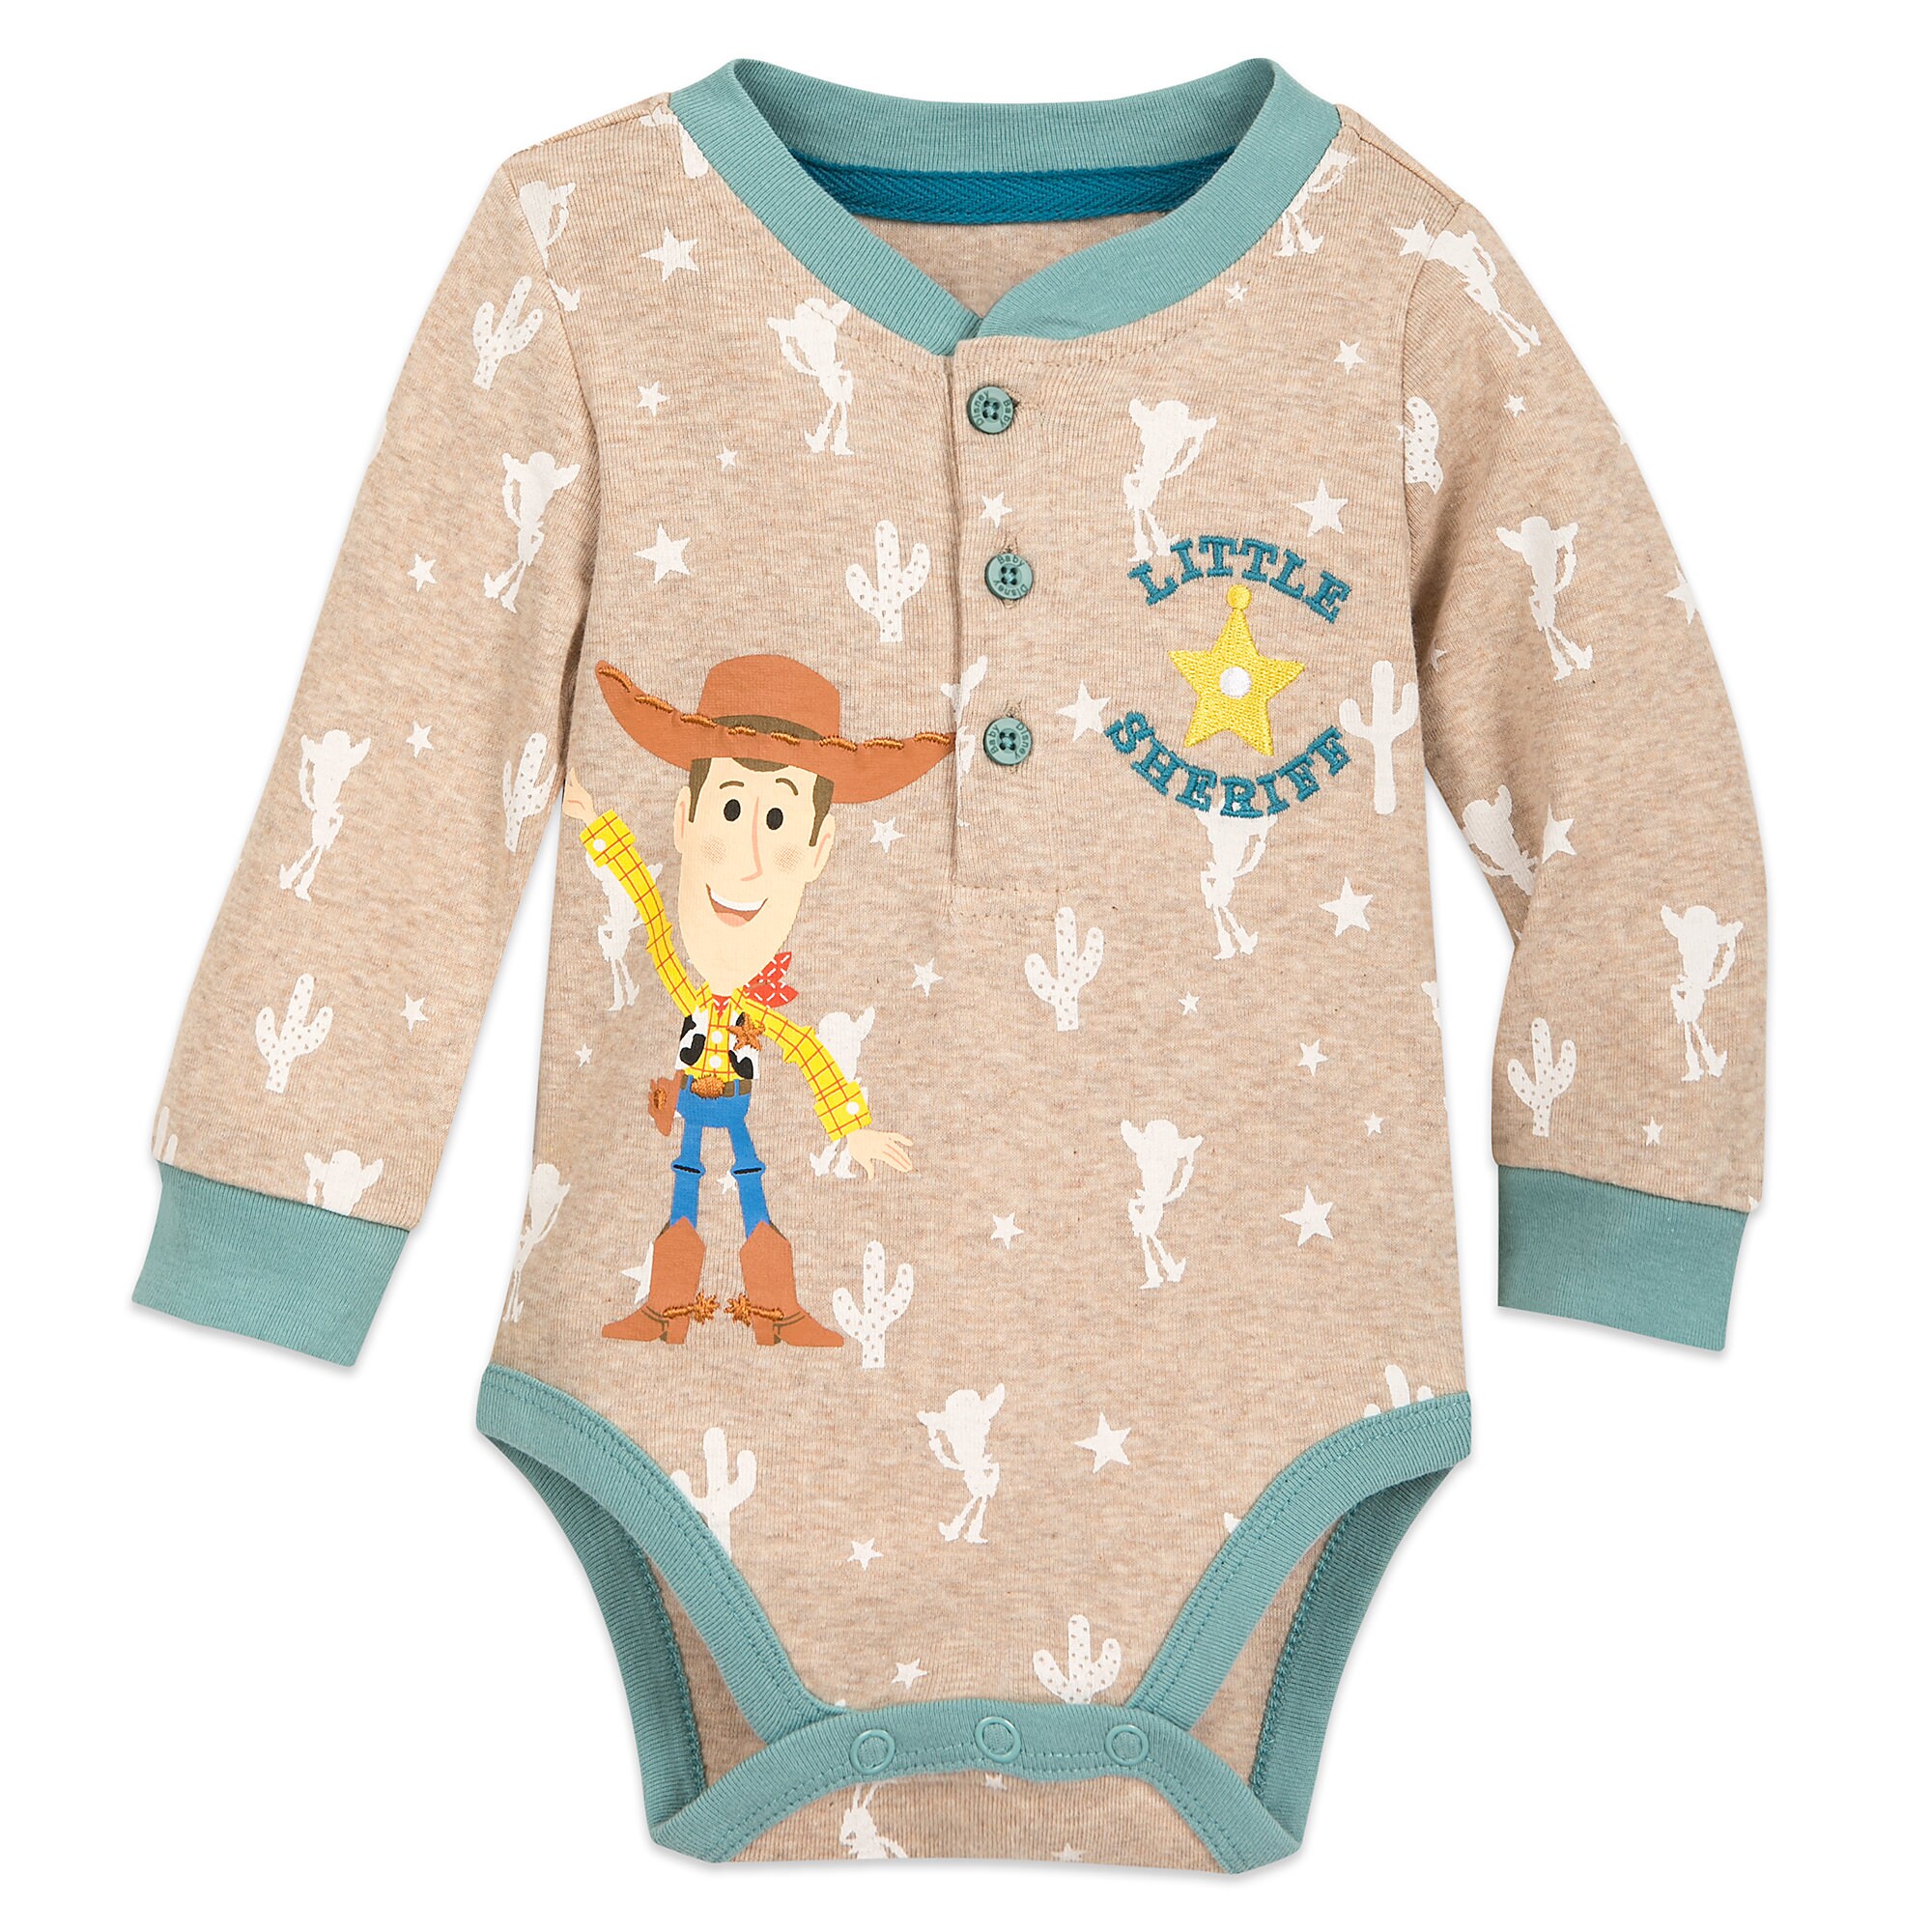 Woody Long Sleeve Bodysuit for Baby